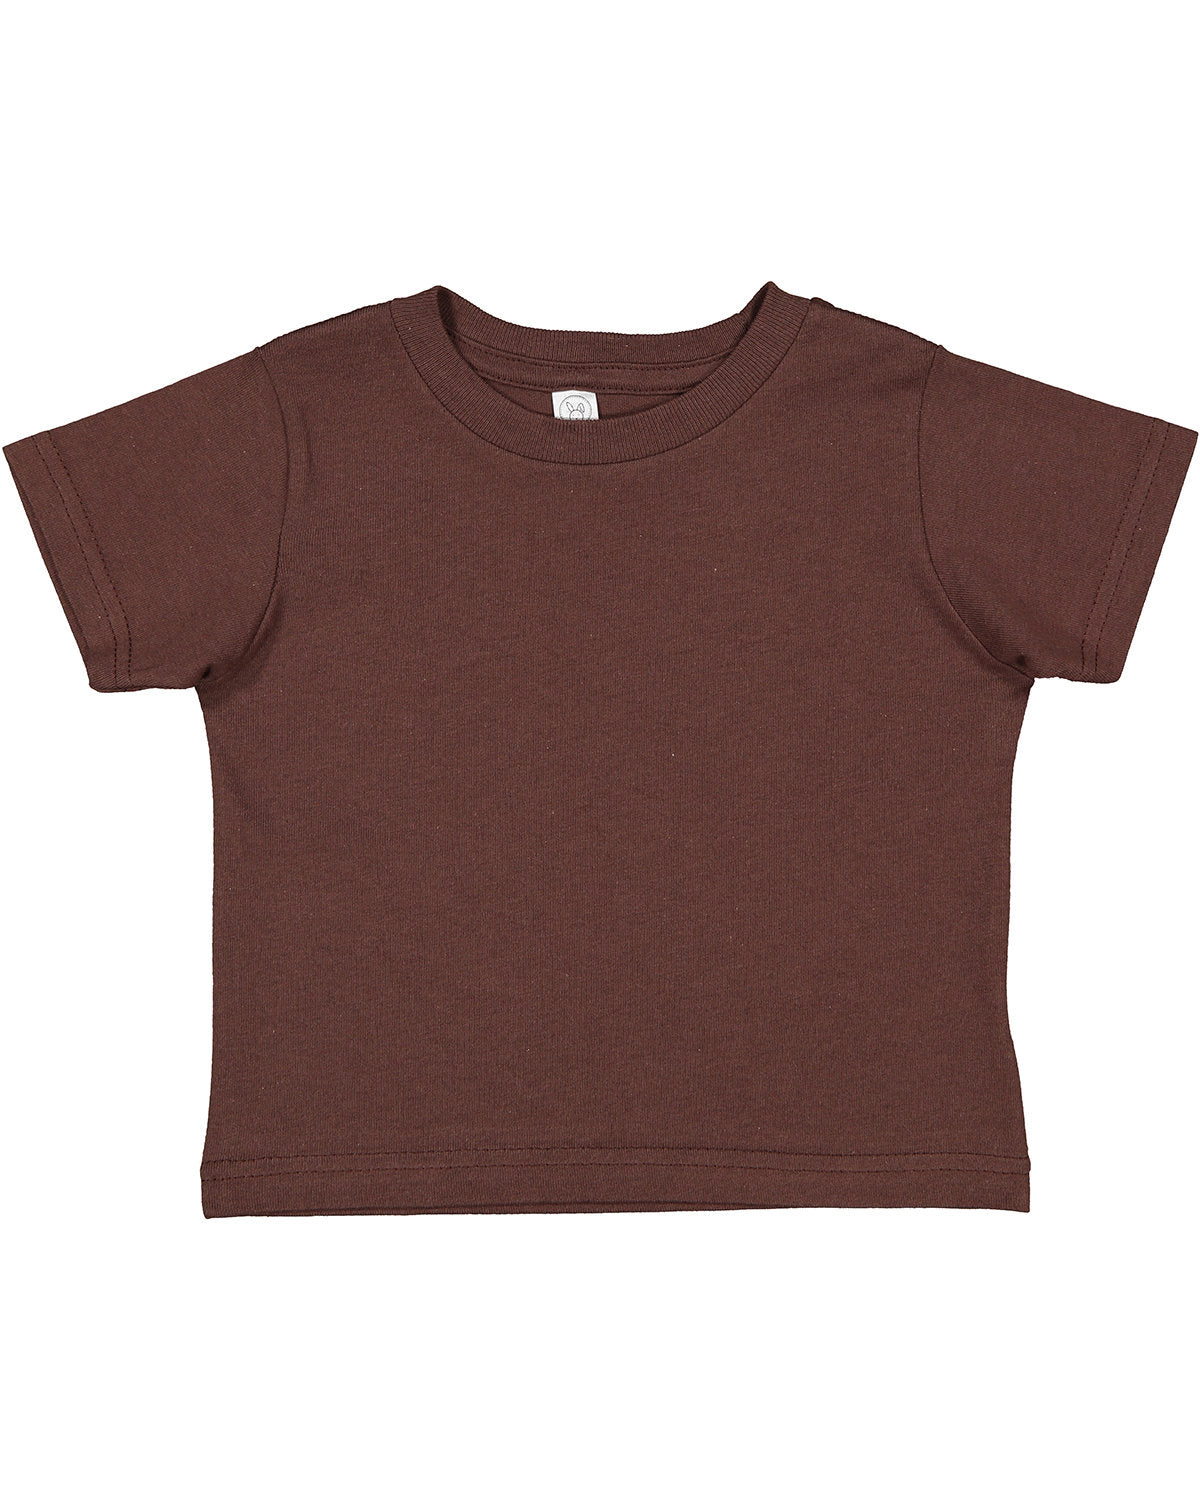 Rabbit Skins Toddler Cotton Jersey T-Shirt 4T / Maroon